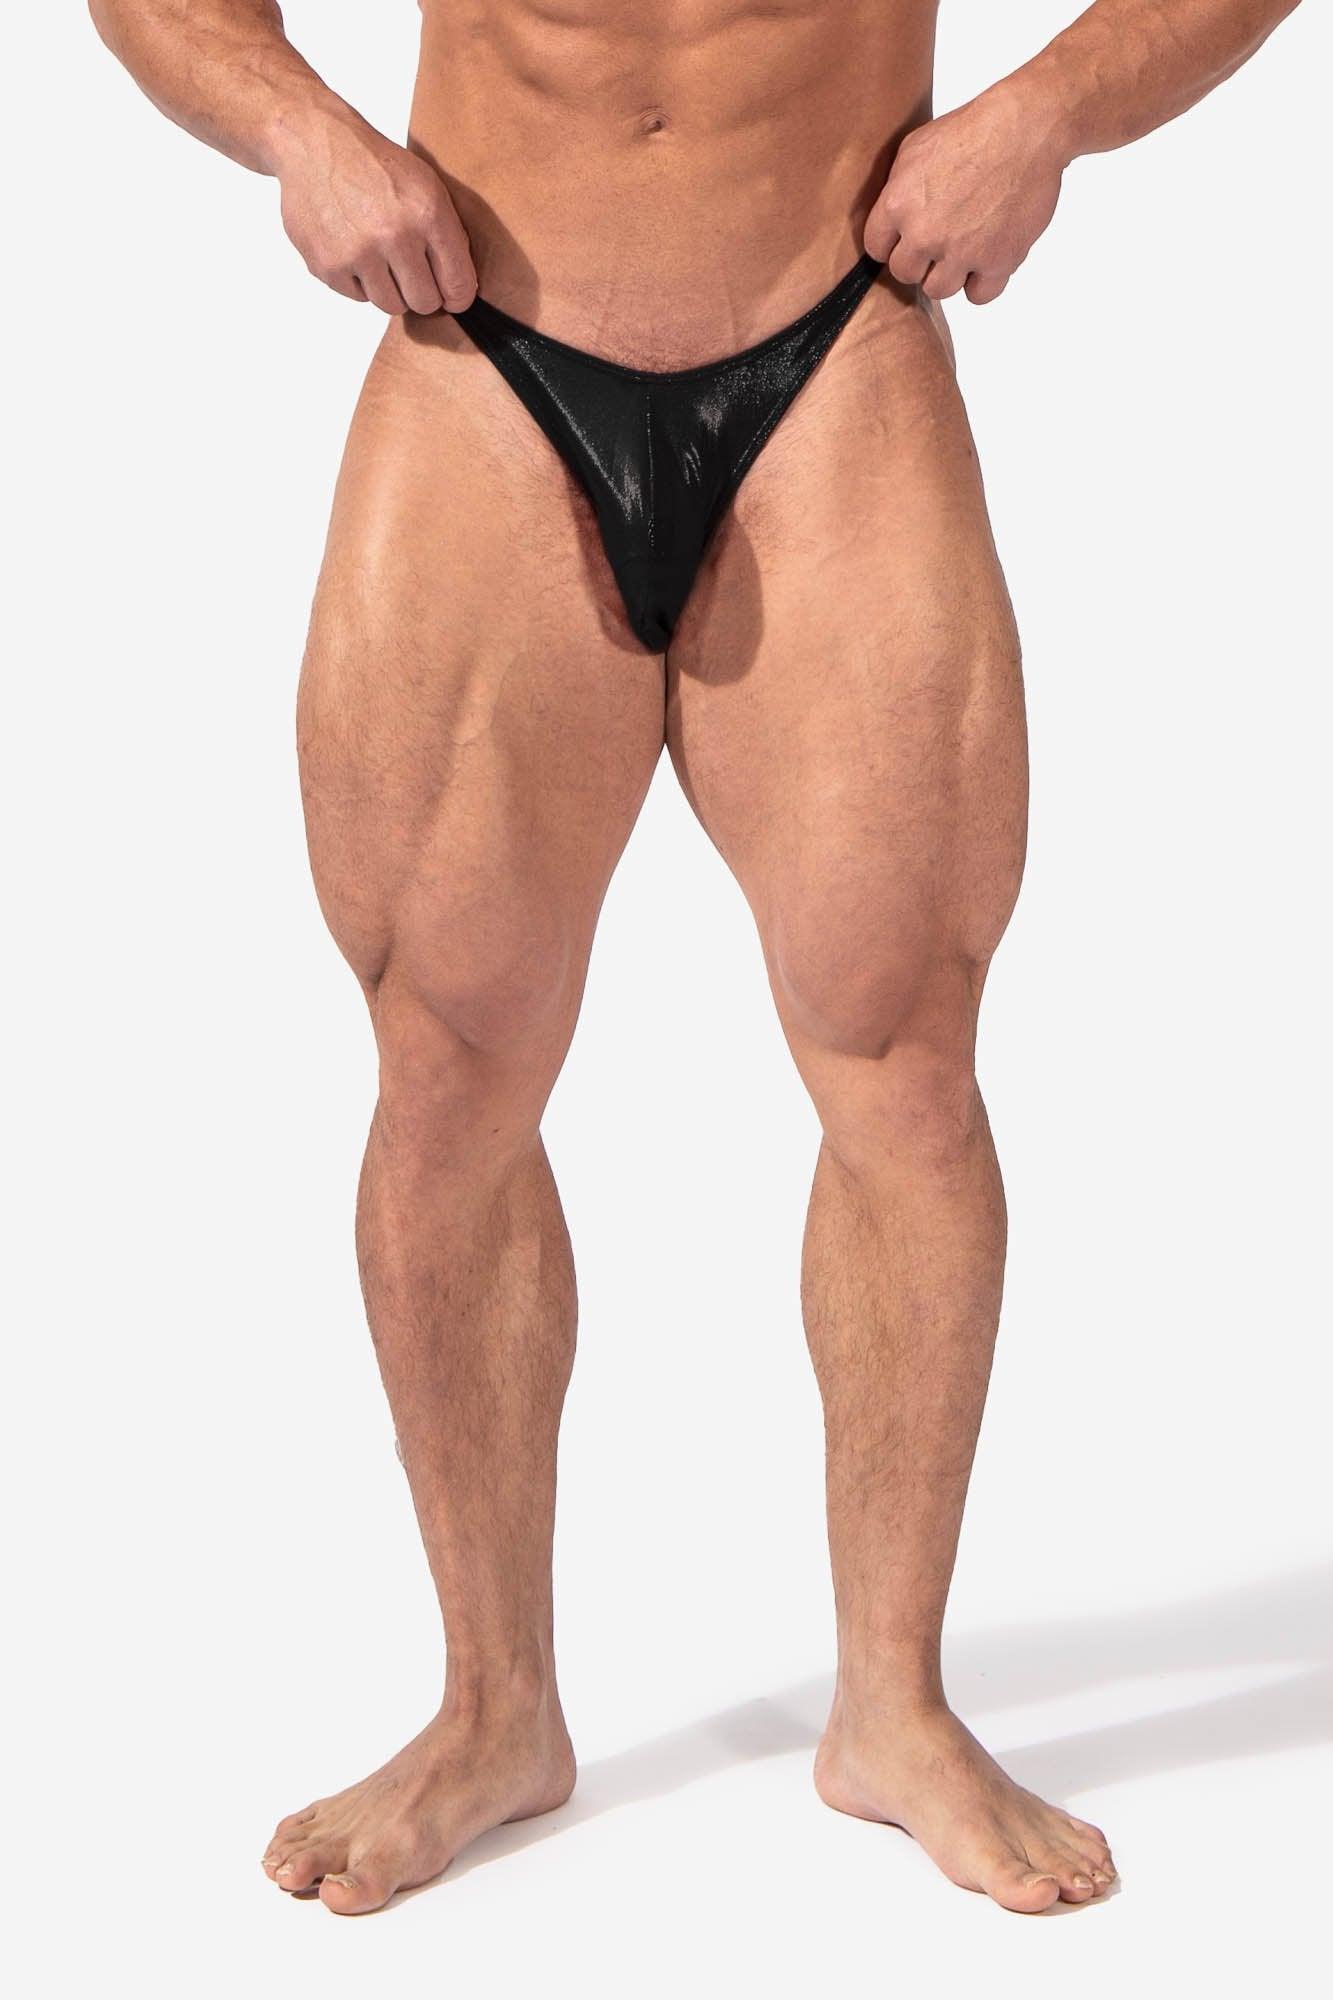 OROCOJUCO Men Whale Tail Bikini Bodybuilding Contest Posing Trunks